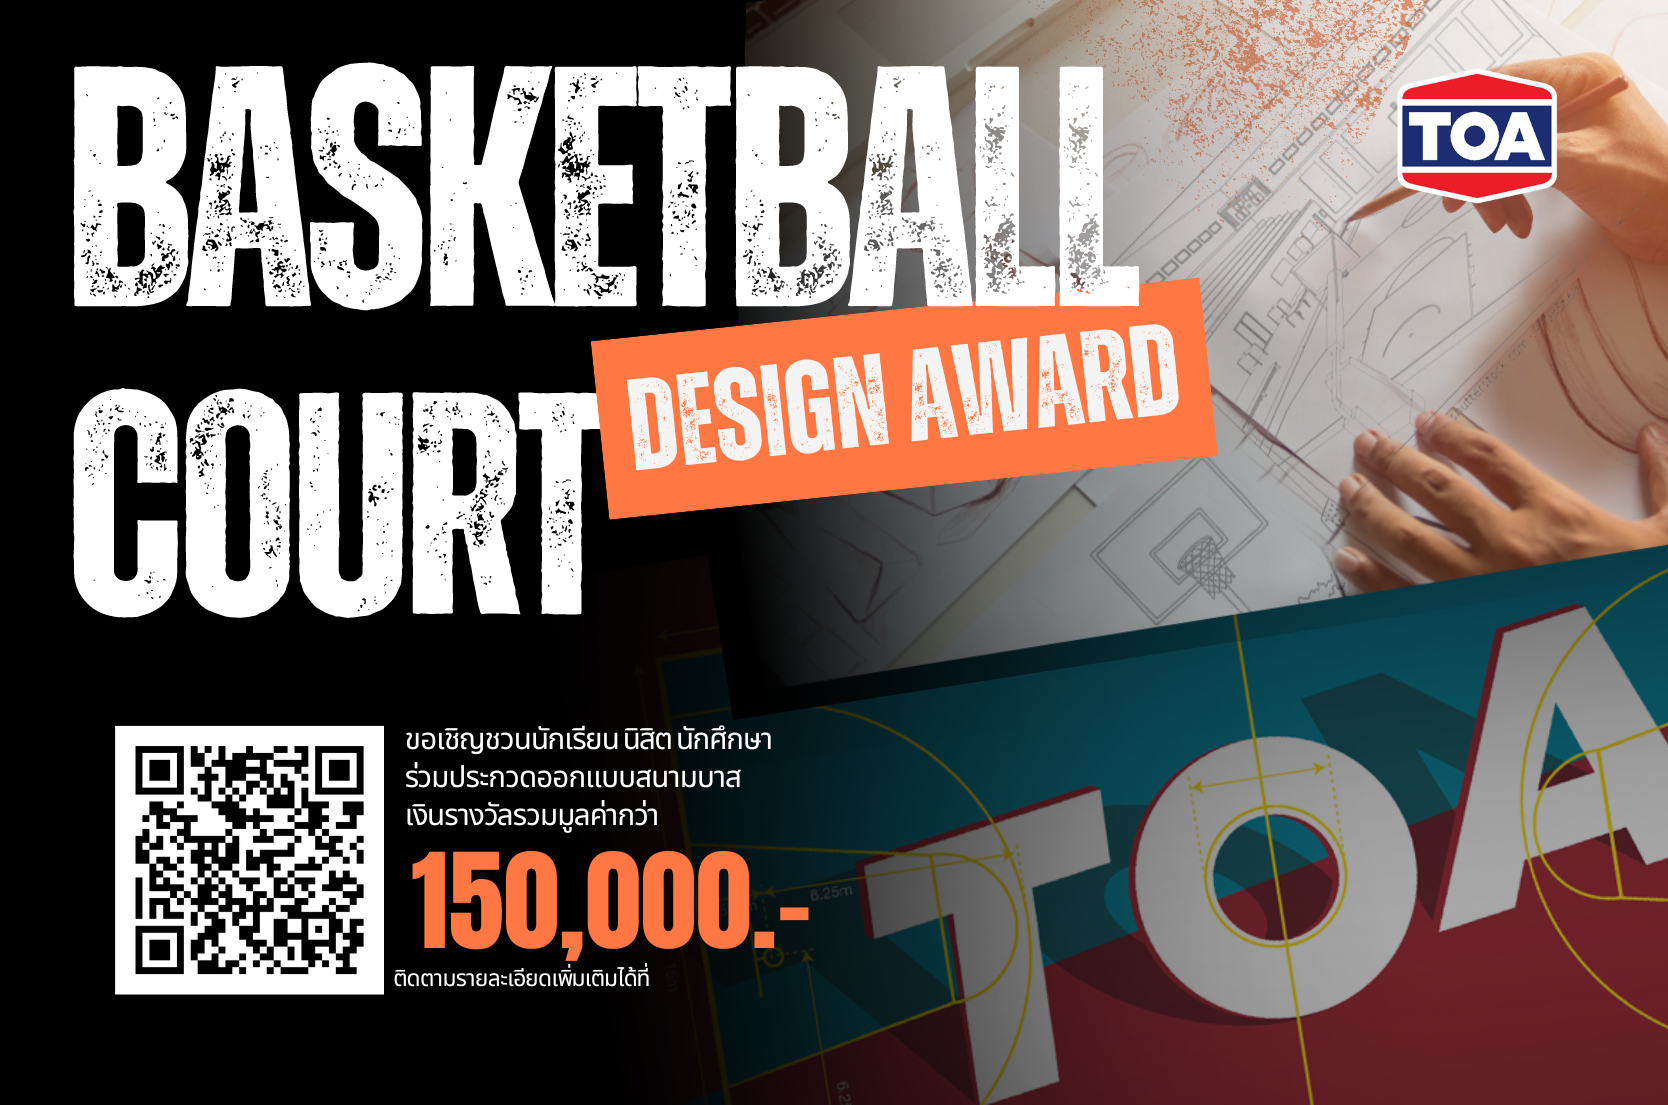 TOA basketball court design